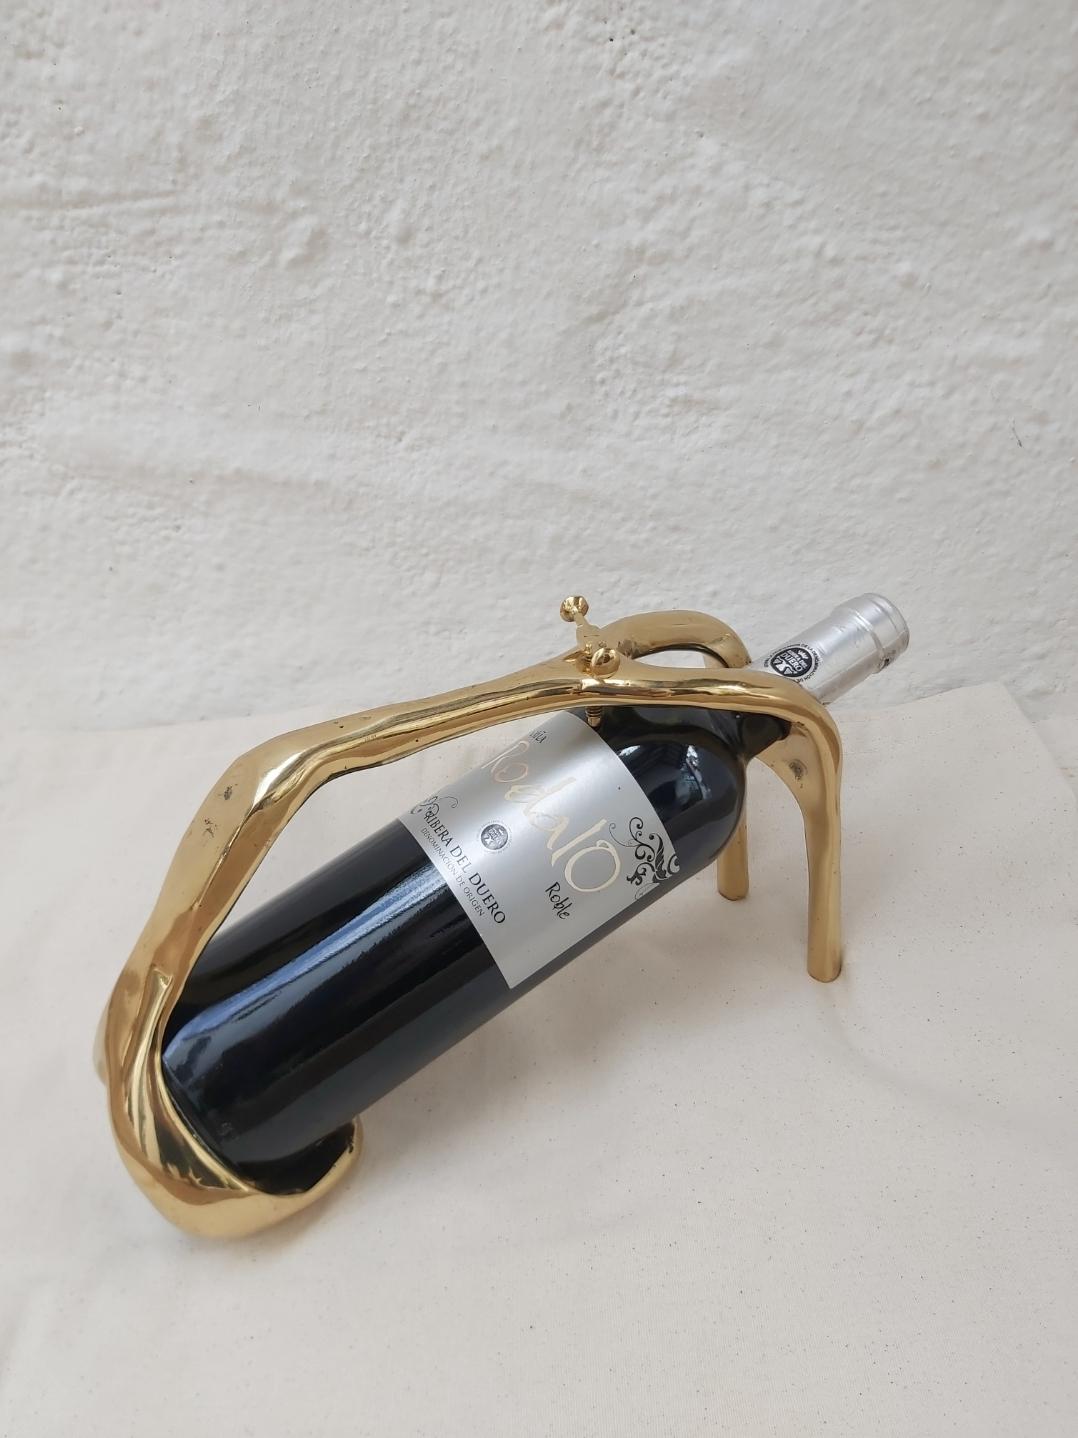 Brutalist Brass Wine Pourer Solid Sand Cast Handmade Decorative Object for Bar or Table For Sale